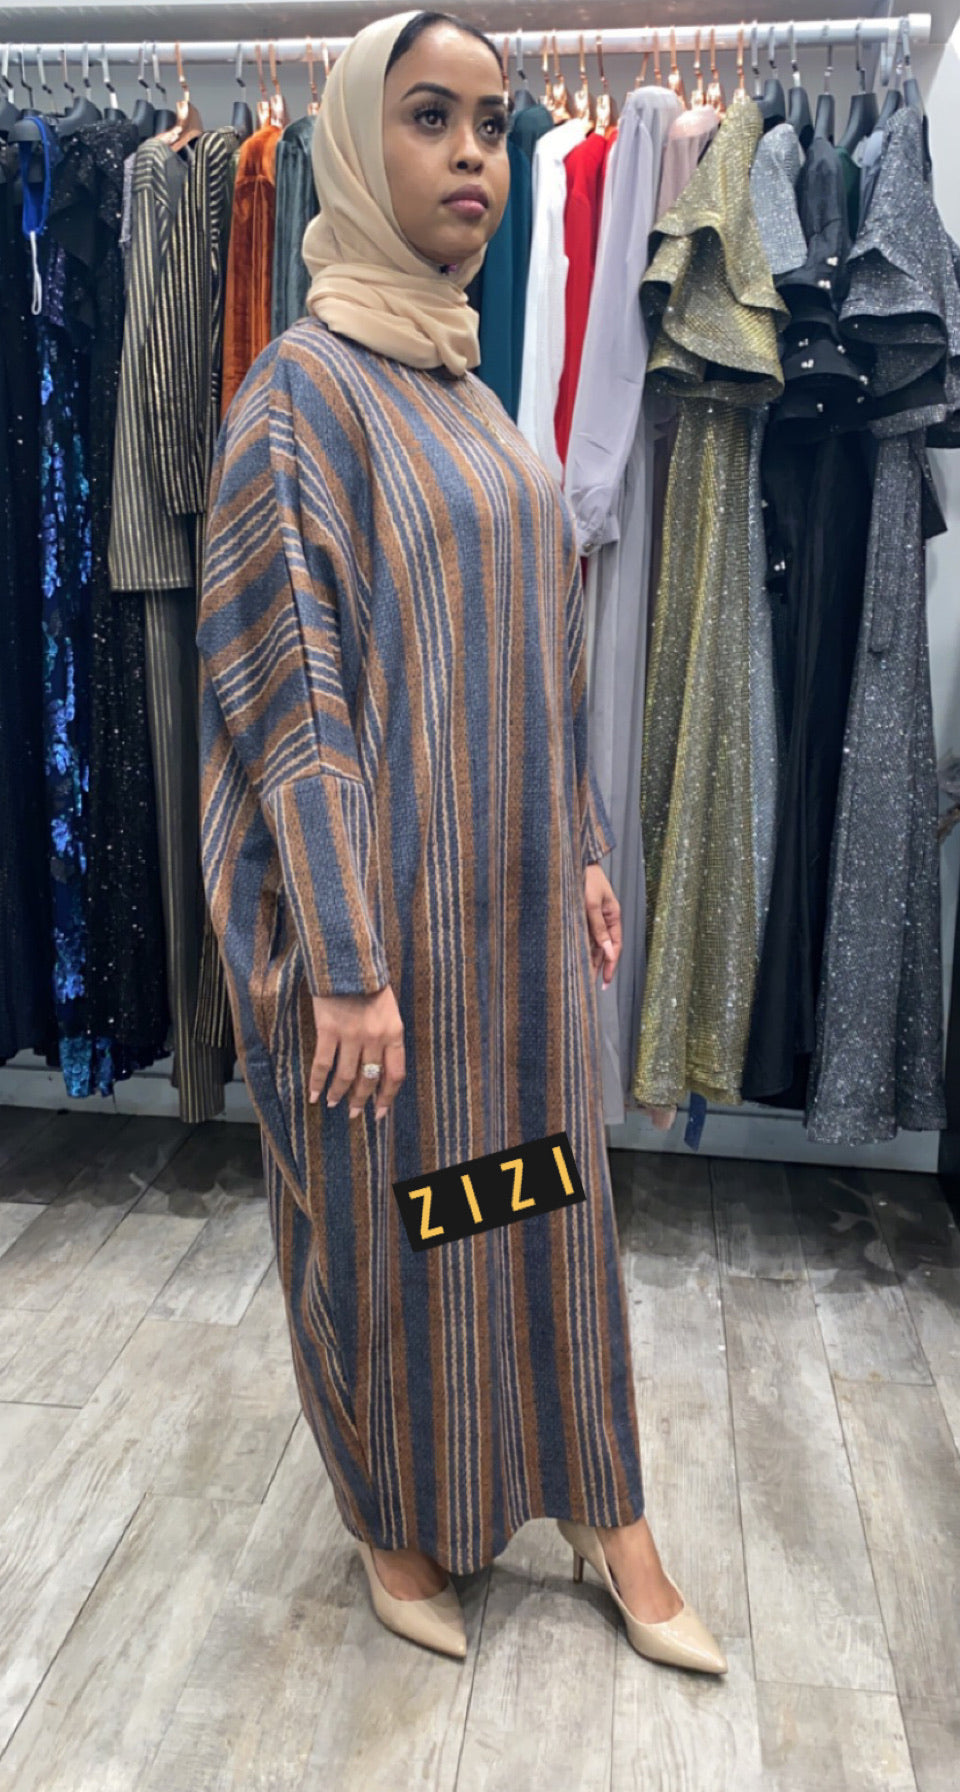 Suede Butterfly Dress - Stripes - ZIZI Boutique